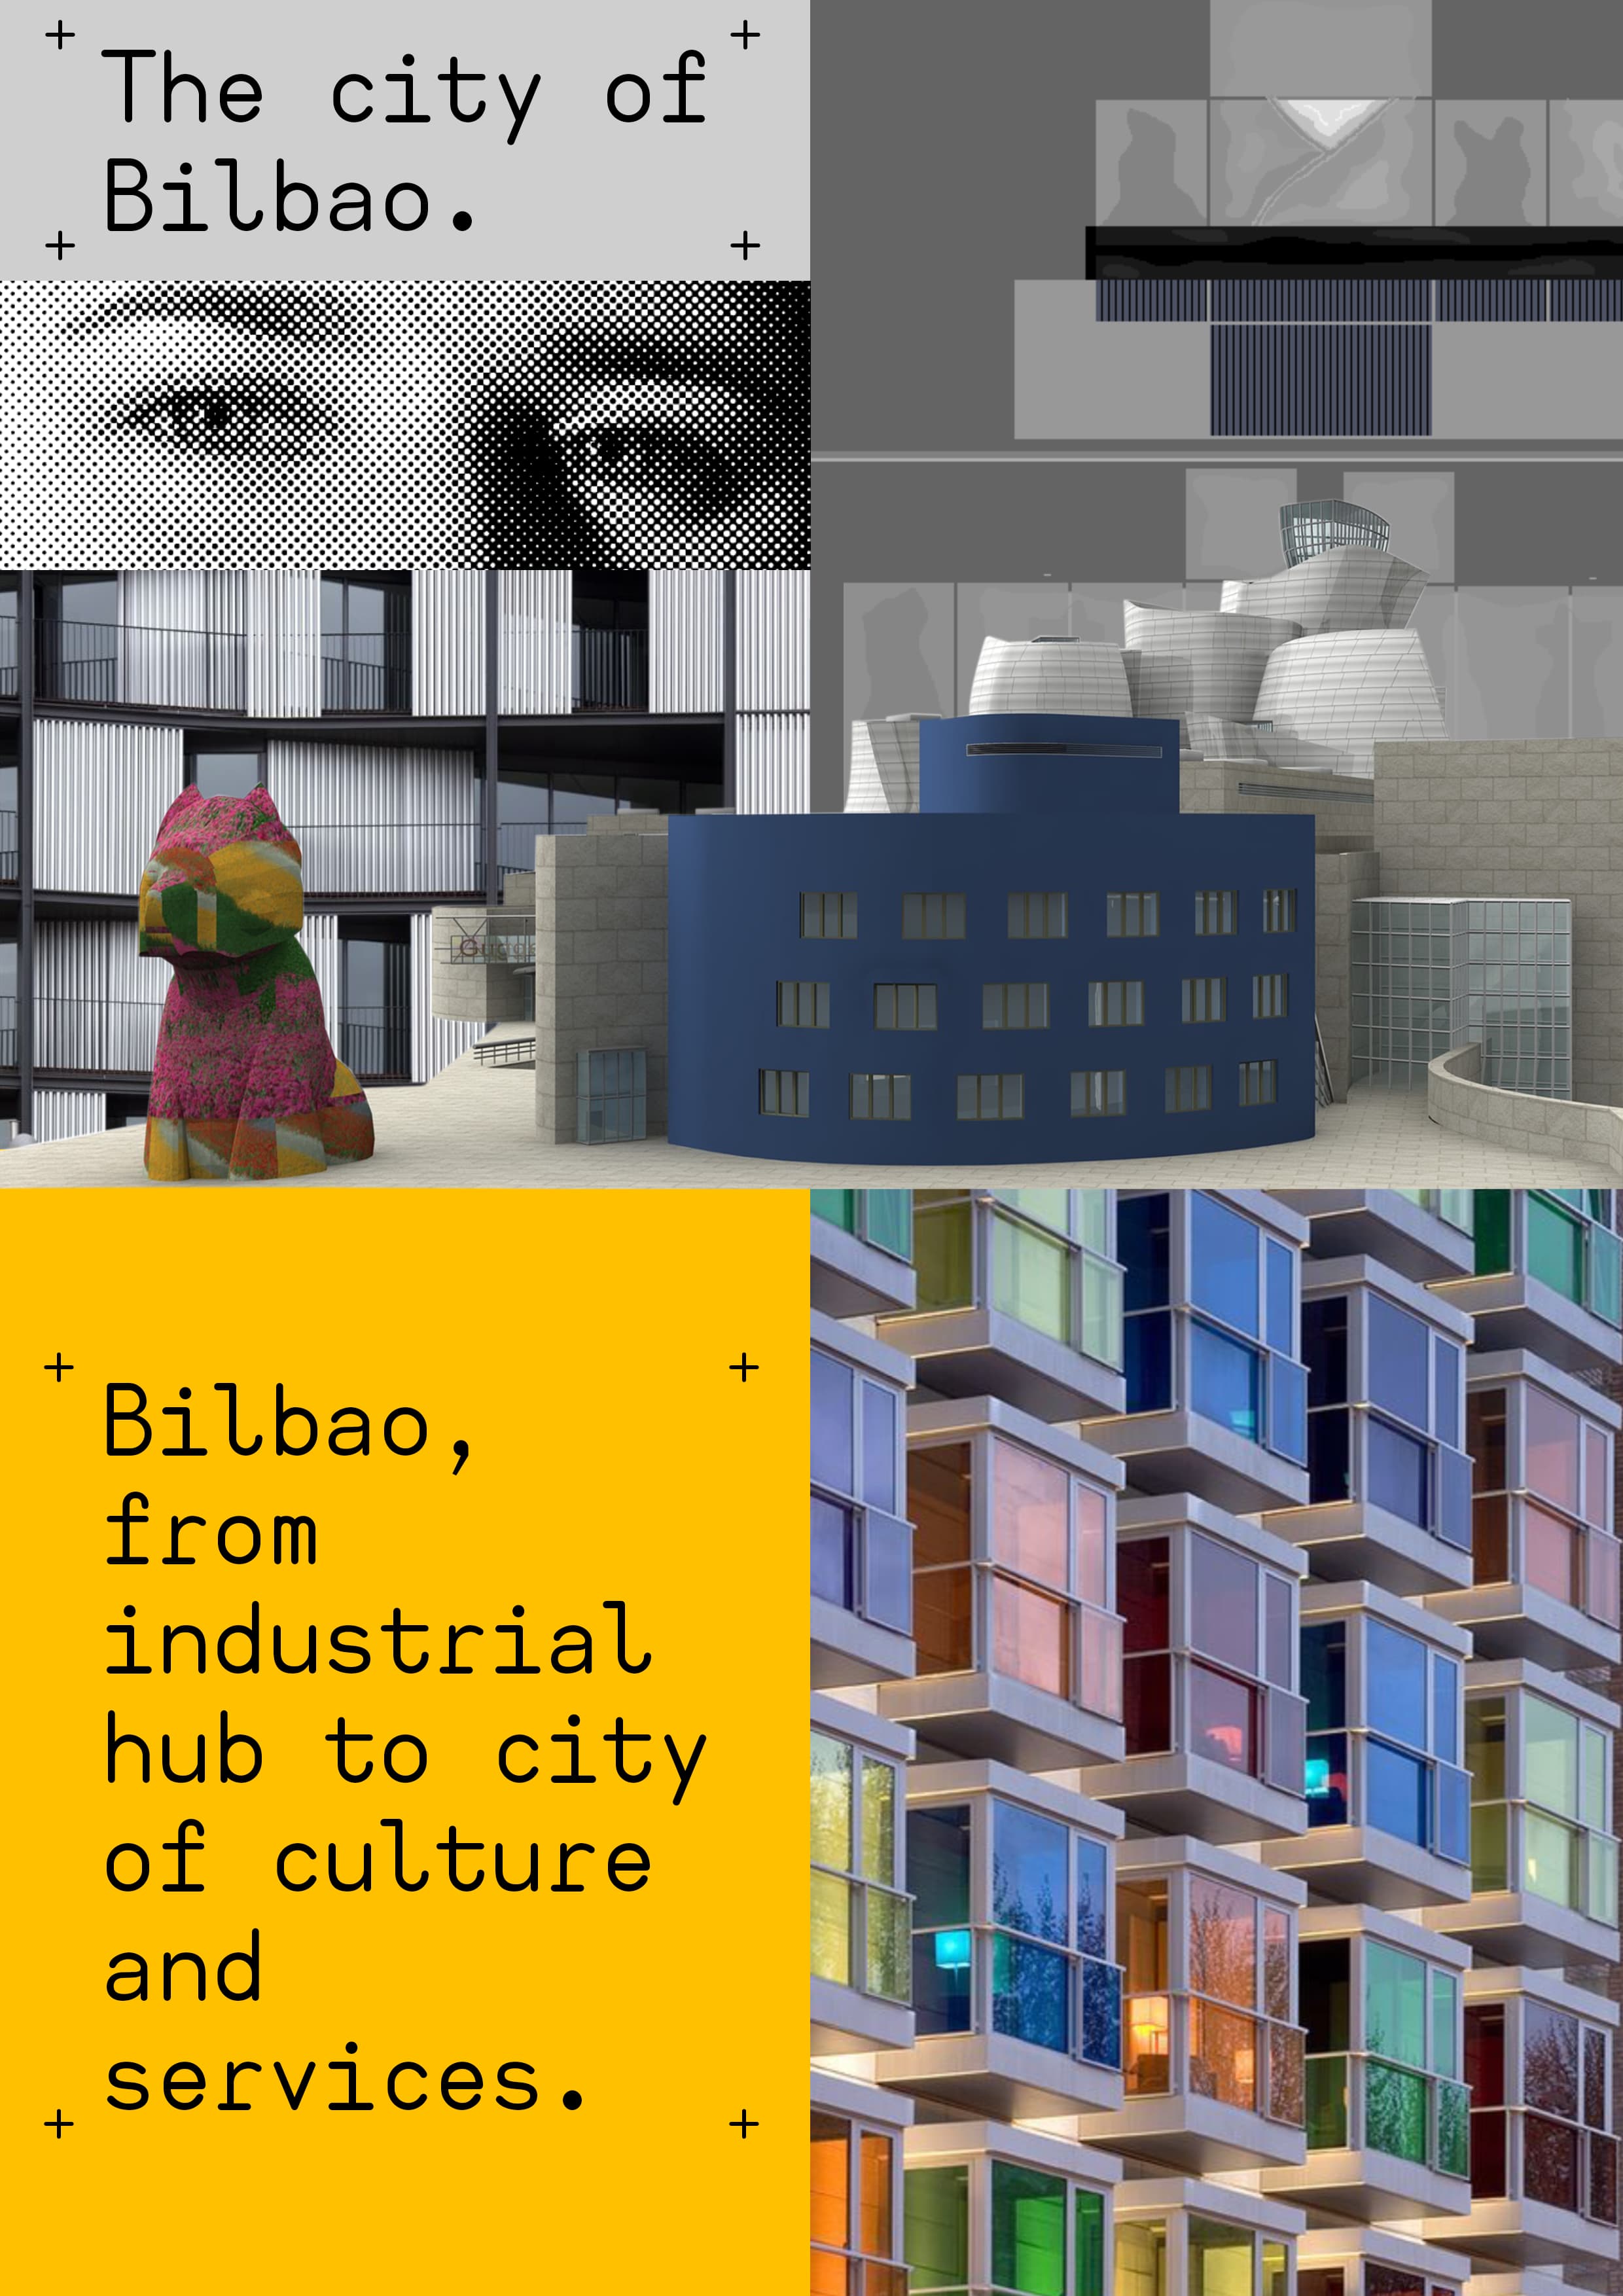 The City of Bilbao by Brando Corradini - Creative Work